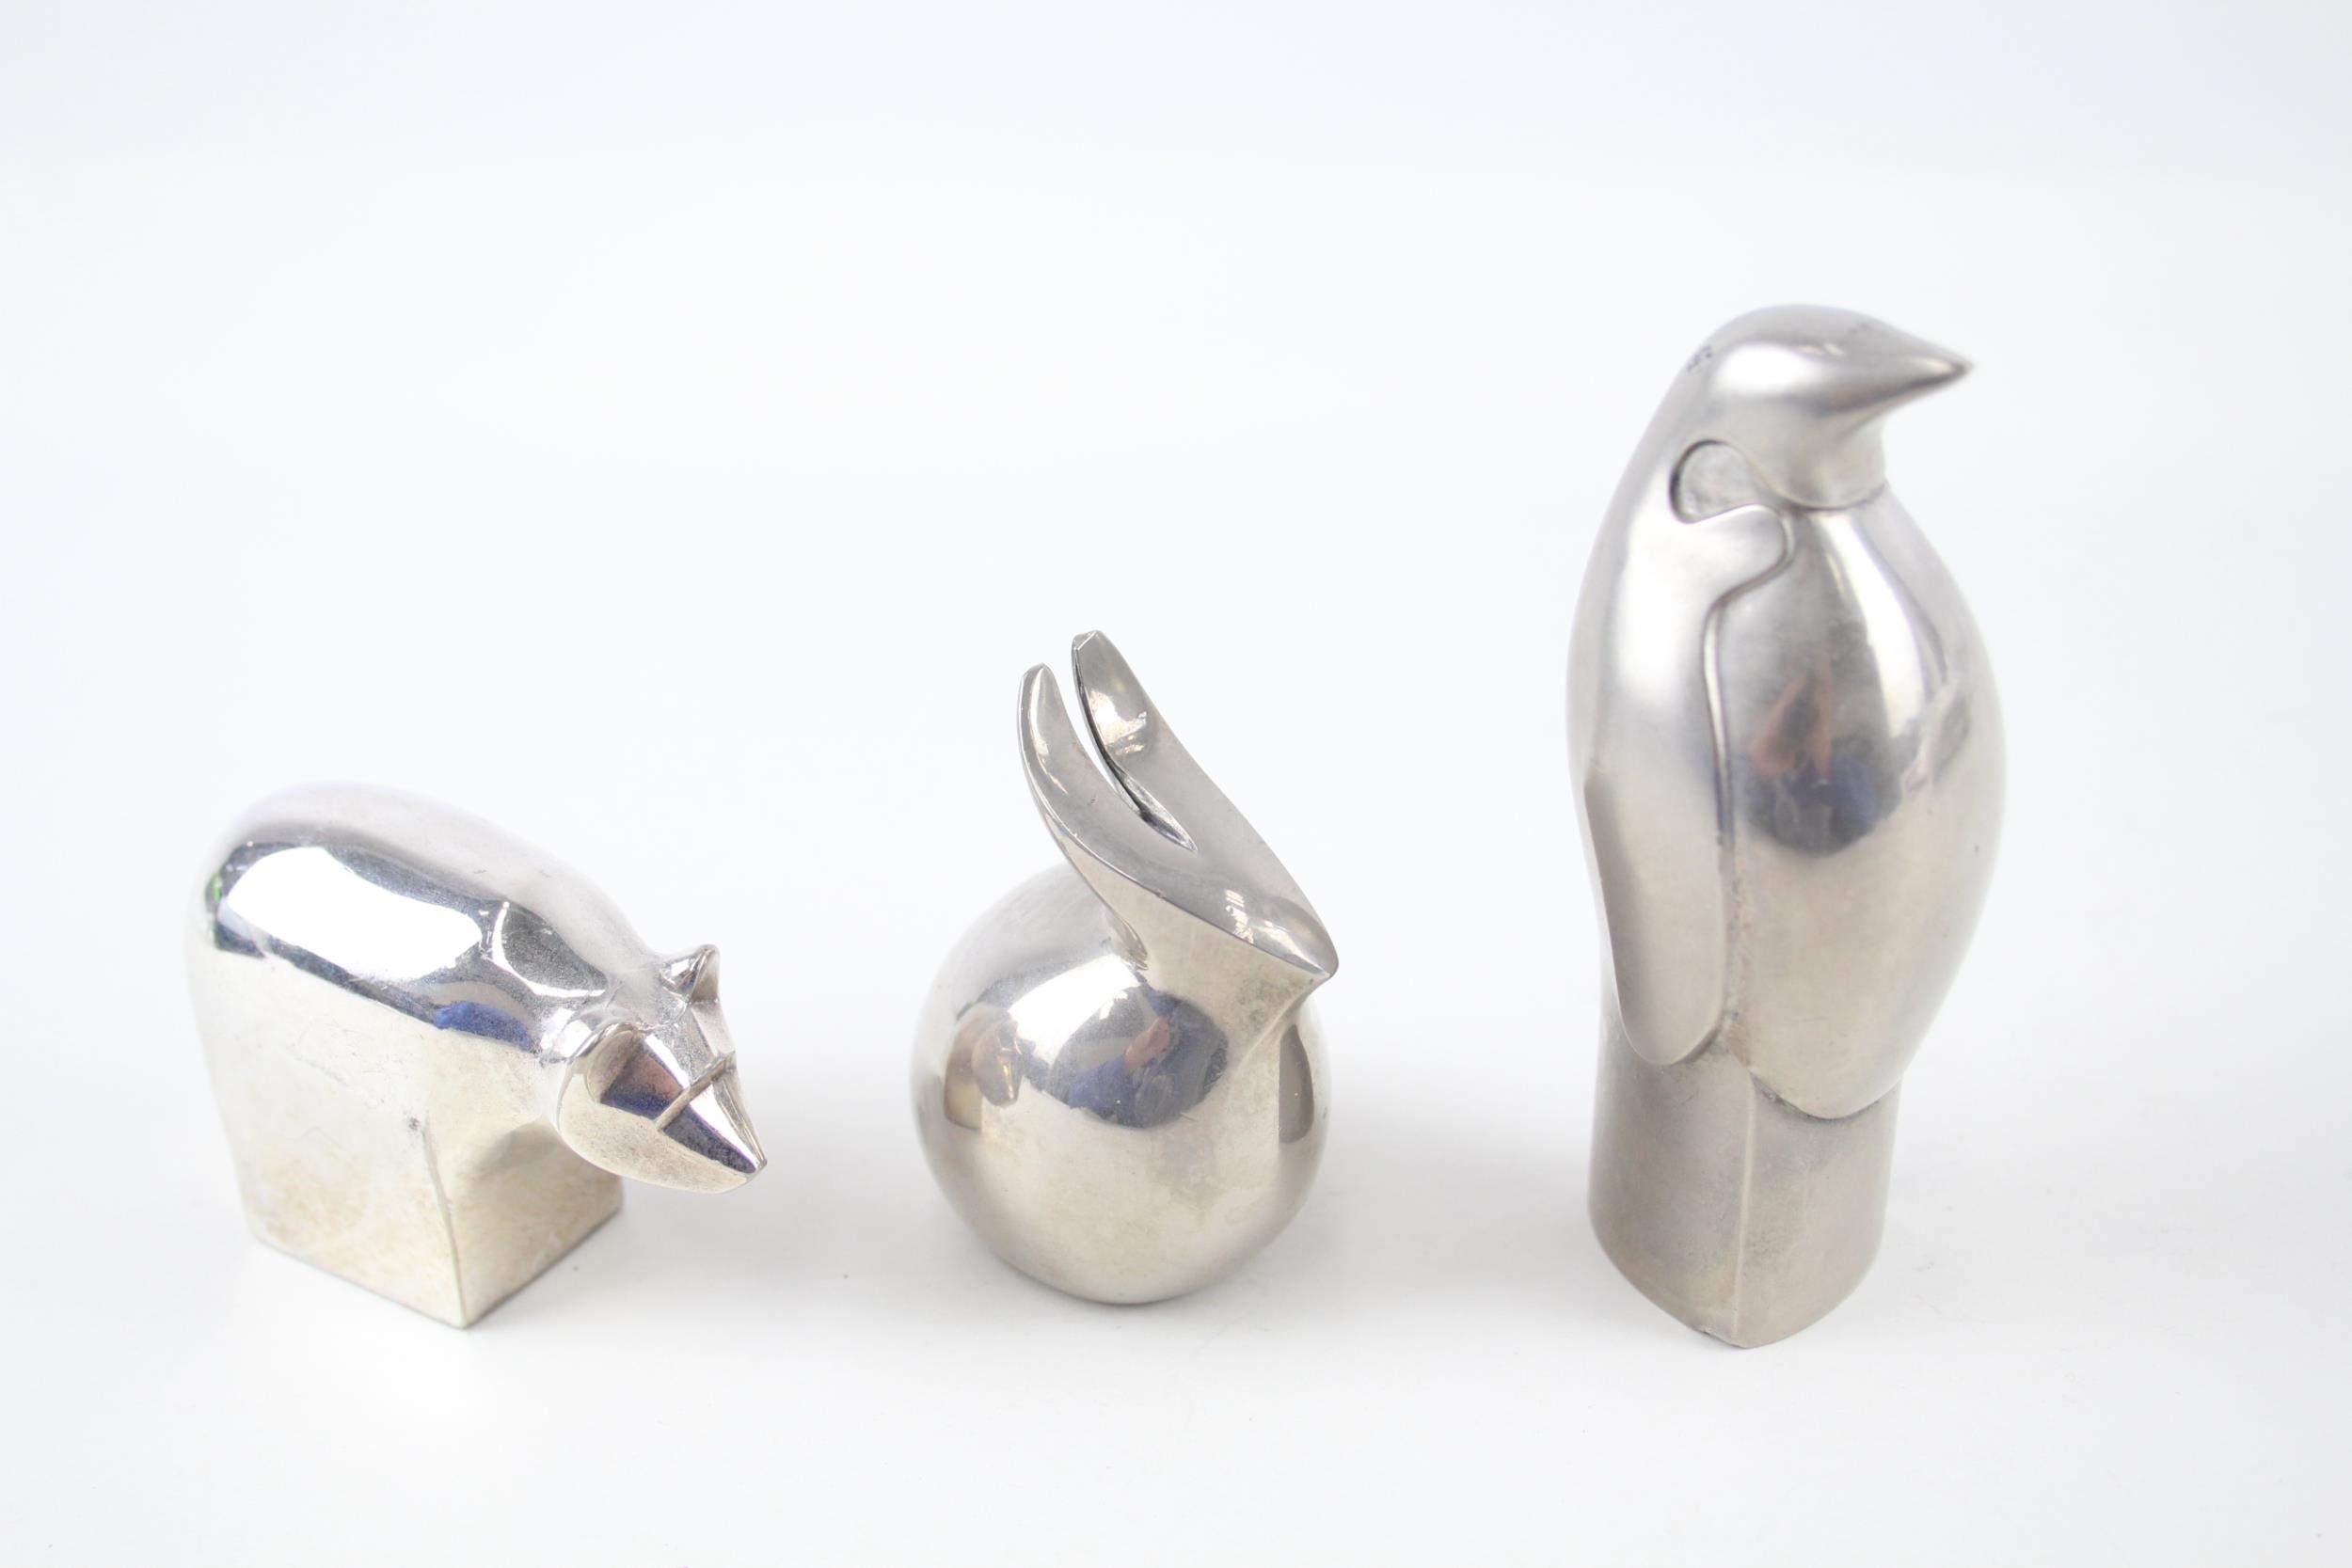 3 x DANSK Japan Silver Plated Novelty Animal Paperweights / Ornaments Inc Rabbit - Inc Rabbit, Polar